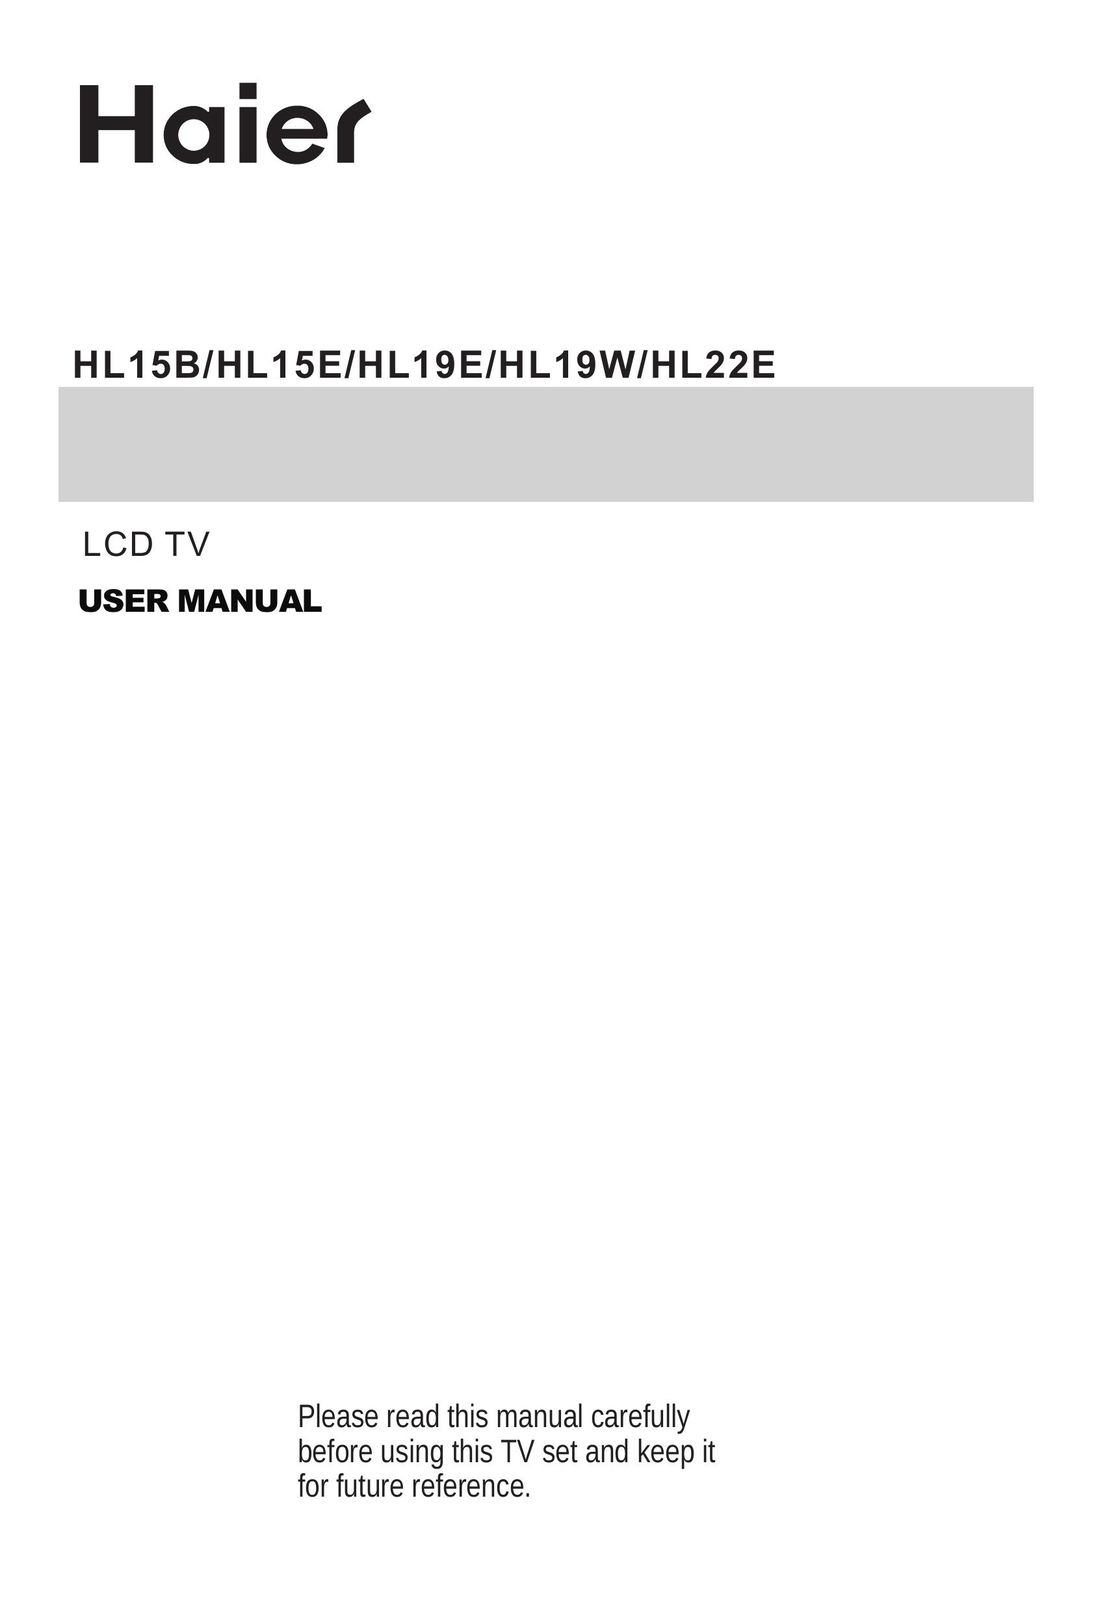 Haier HL15E Flat Panel Television User Manual